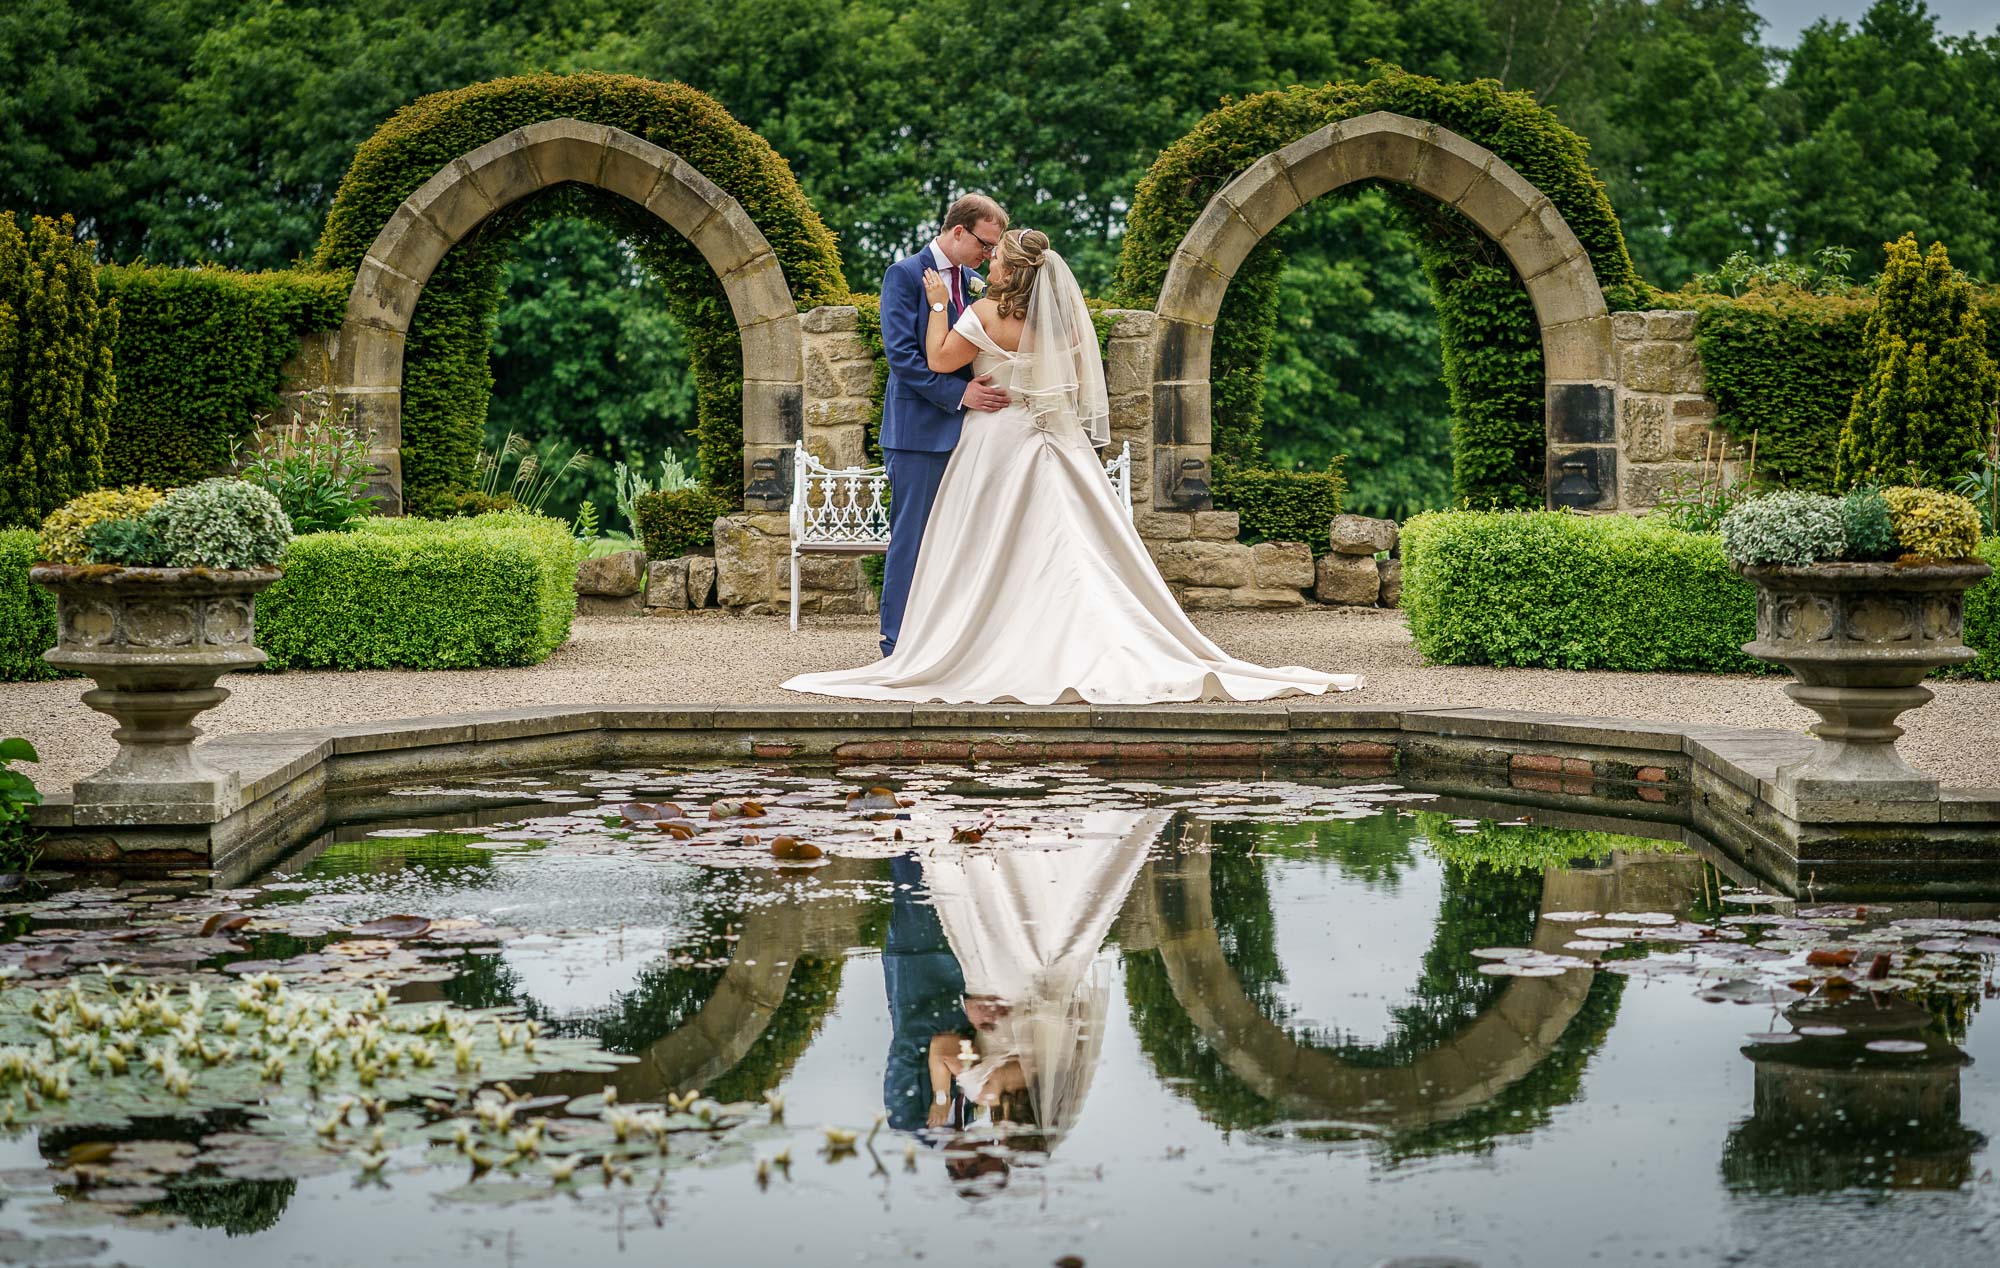 Wedding Photograph taken near the pond at Allerton Castle near York